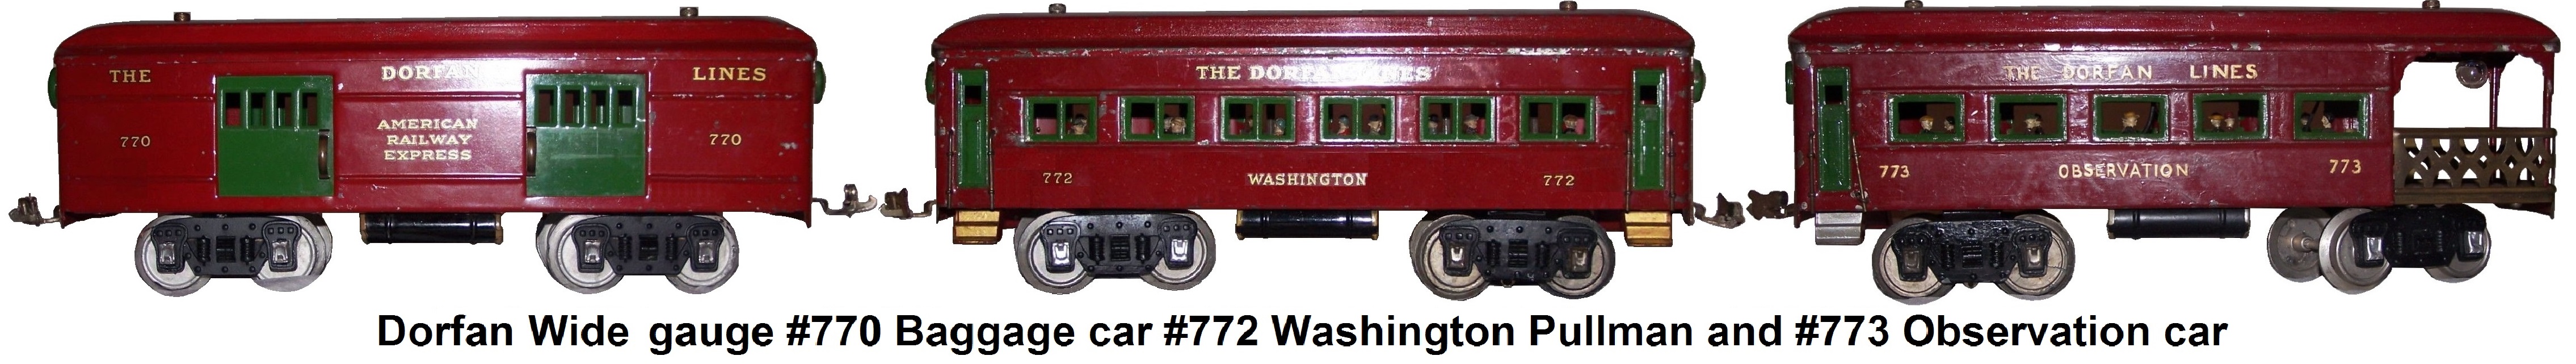 Dorfan Red Wide gauge #770 Baggage car #772 Washington Pullman and #773 Observation car